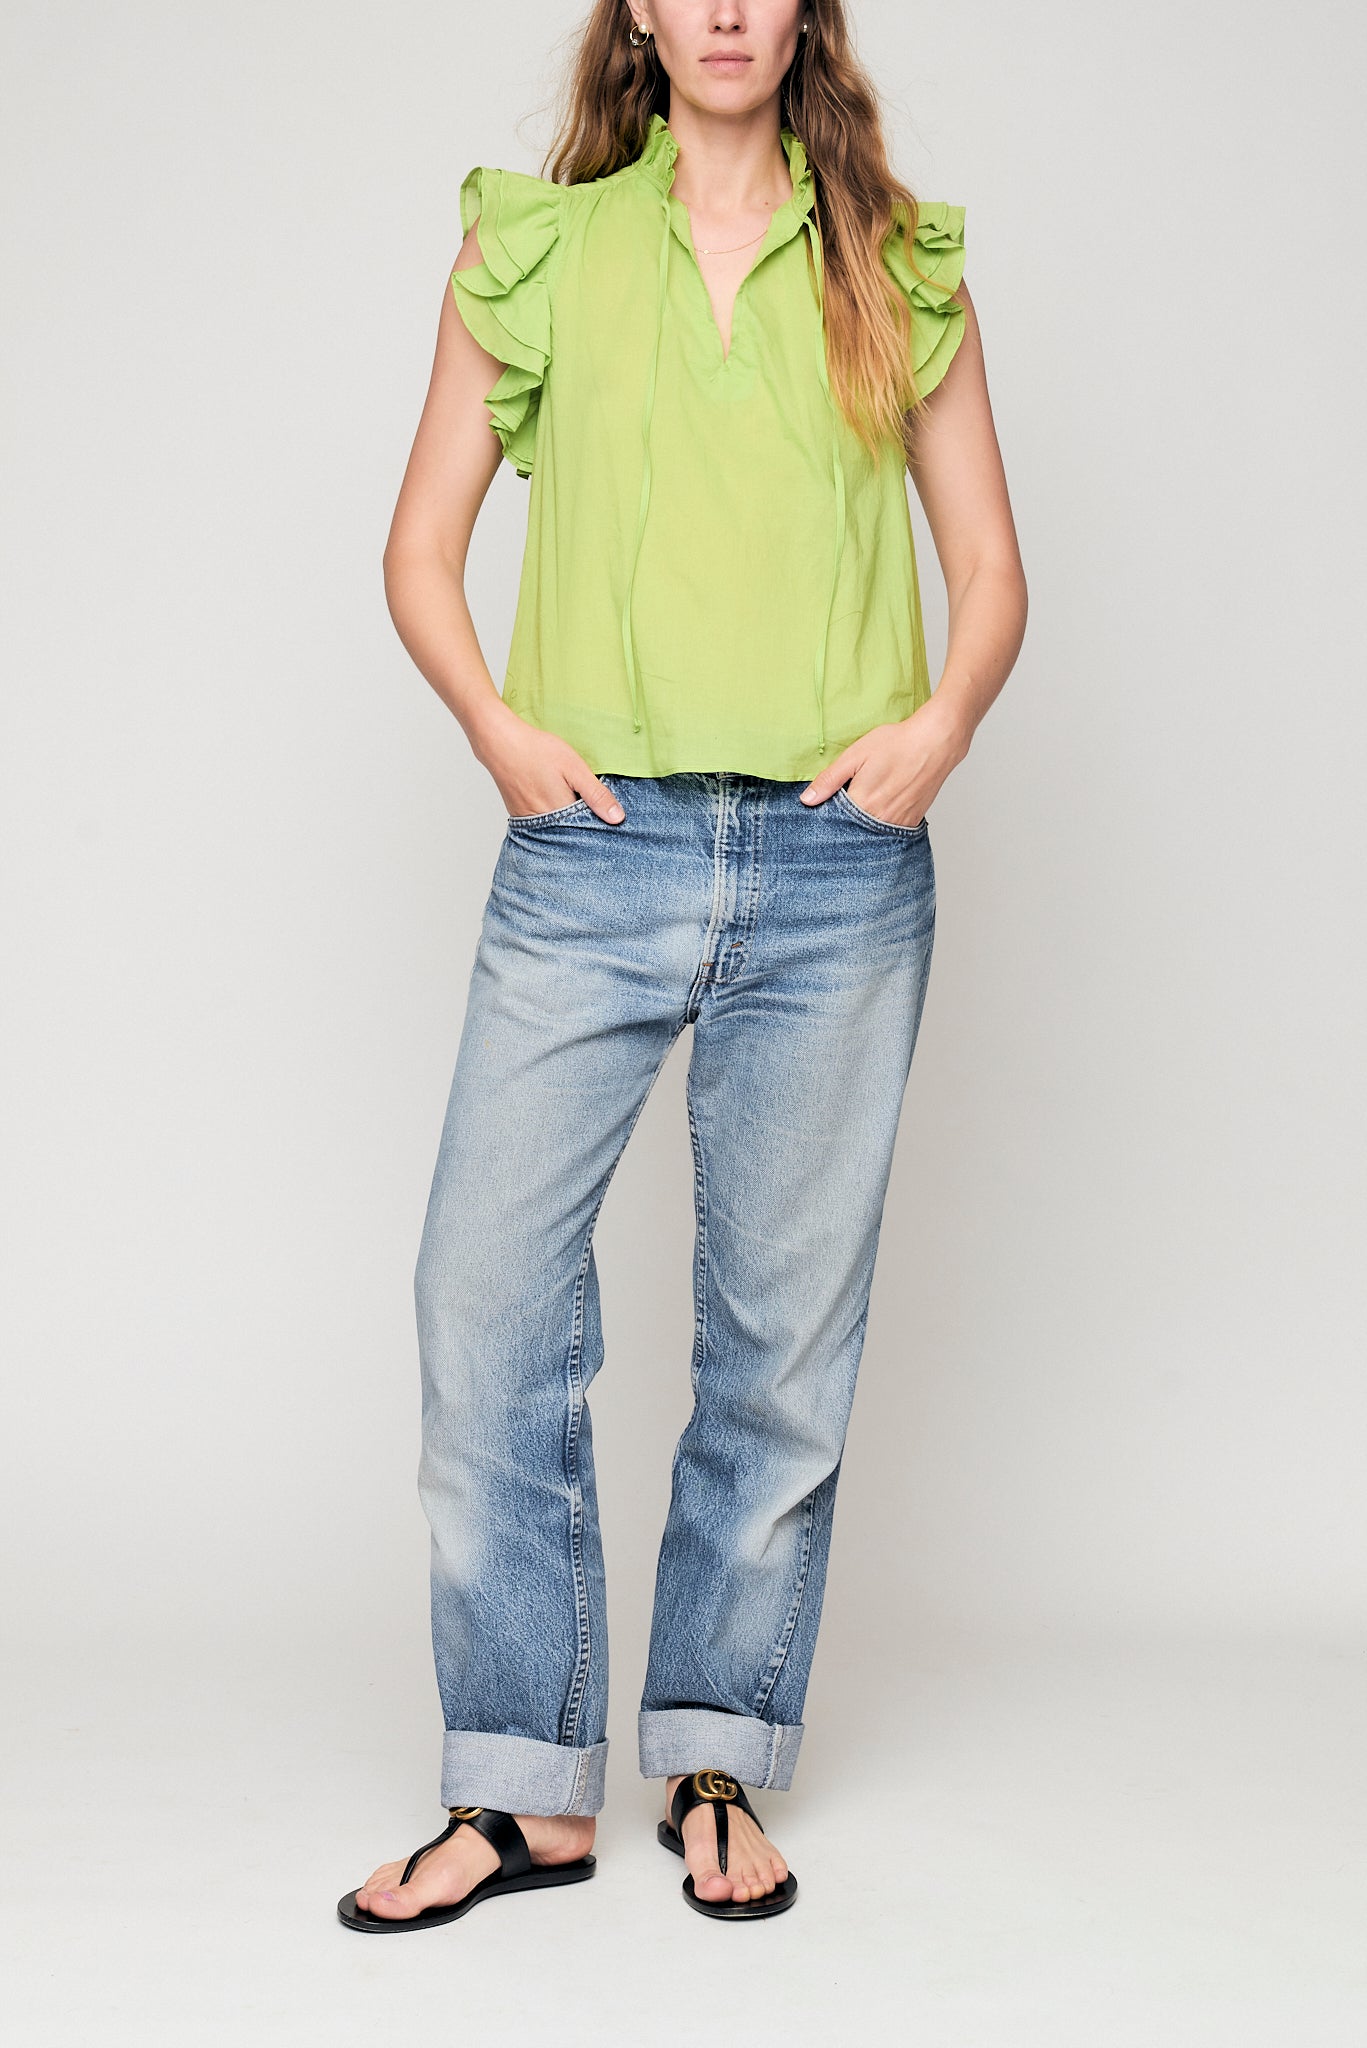 Meadow Shirt - Lime